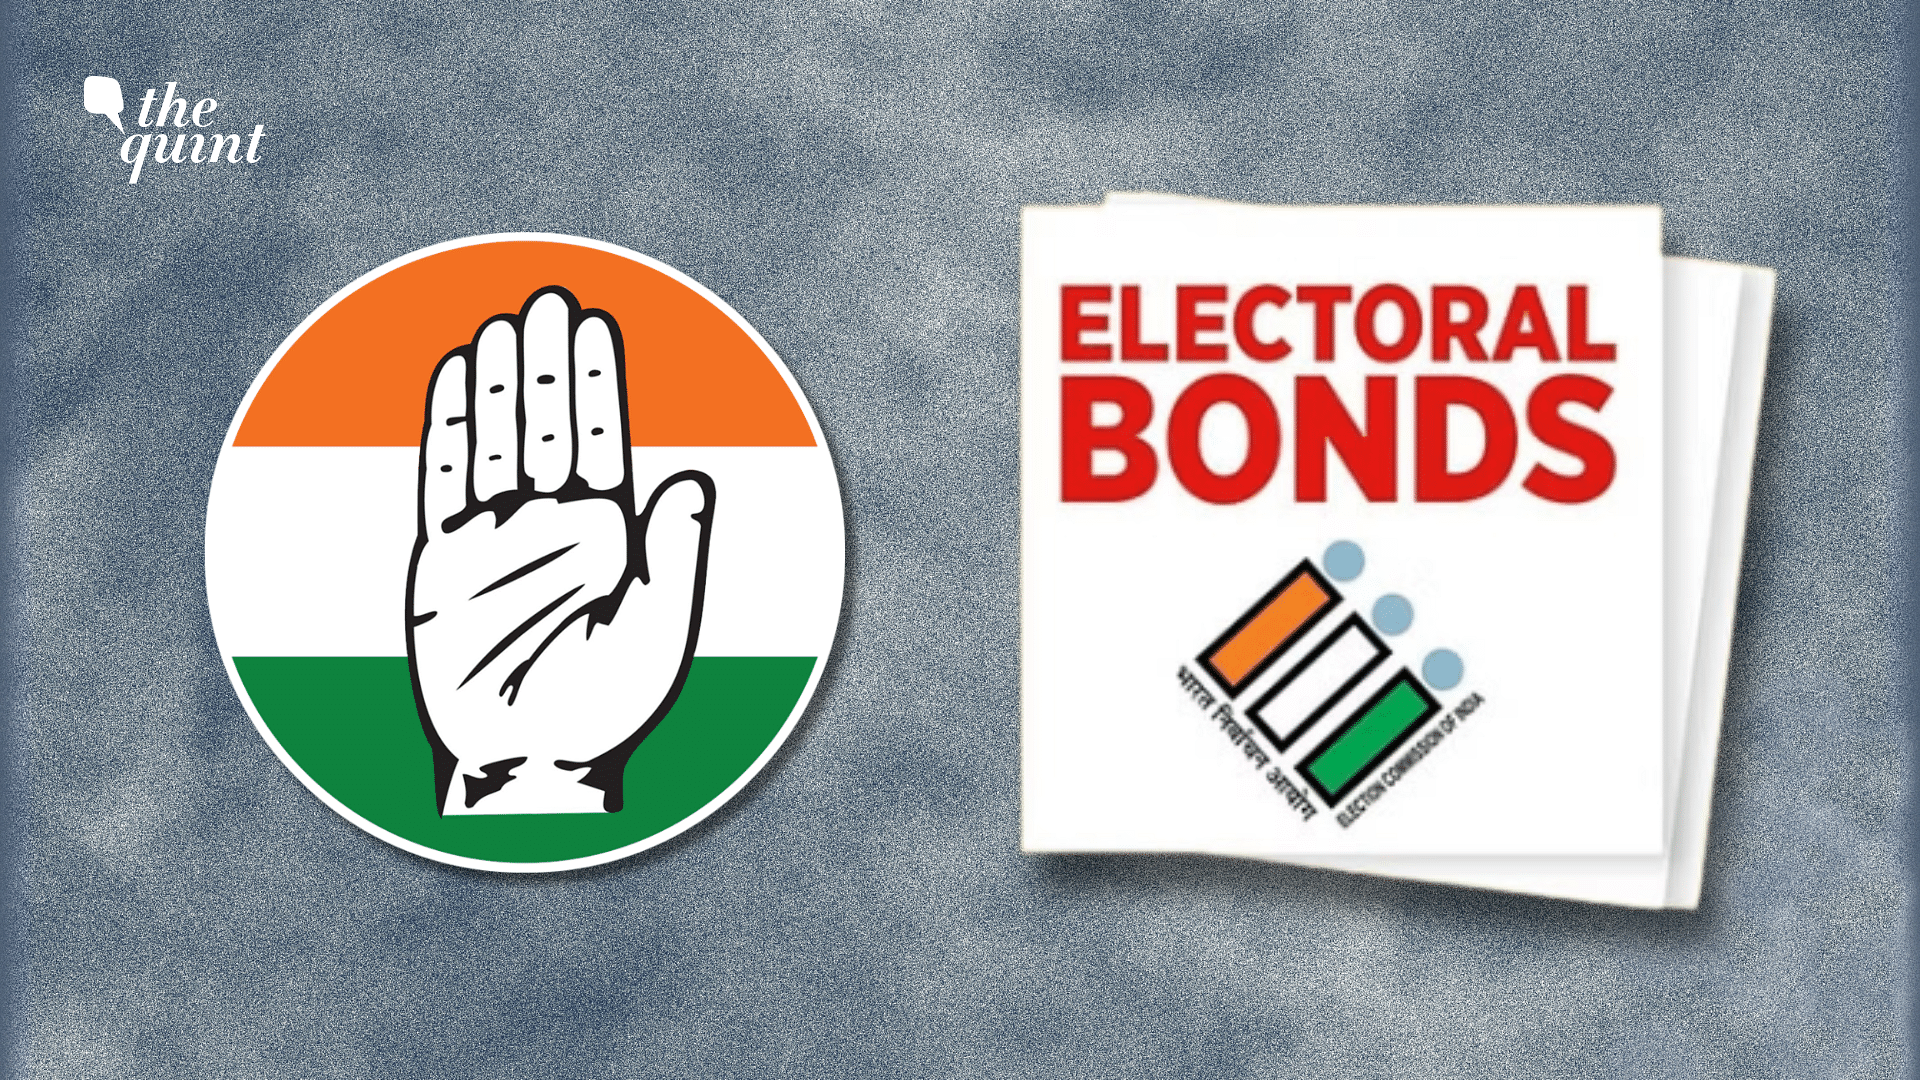 <div class="paragraphs"><p>Congress got&nbsp;a total of 1,421 crores worth donations through the electoral bonds.</p></div>